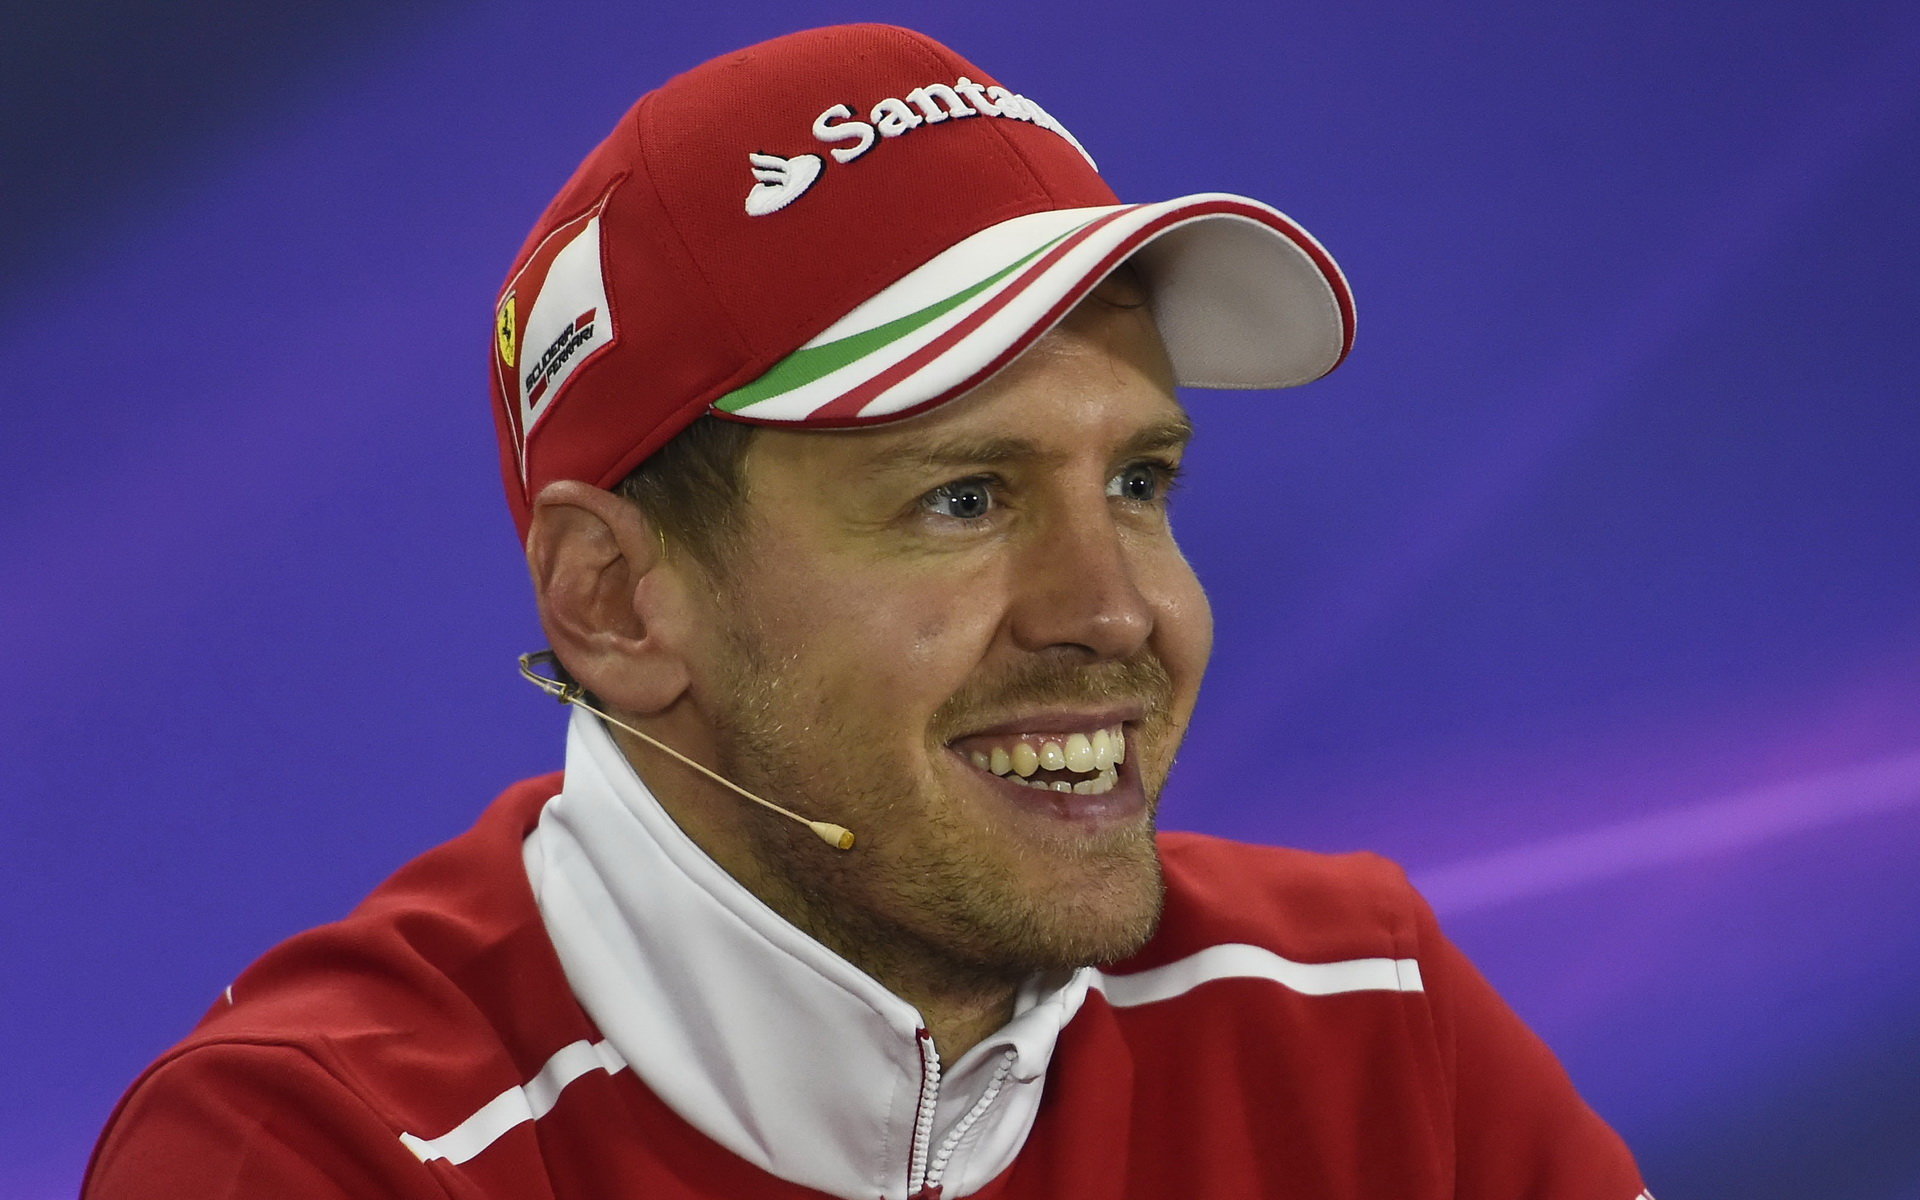 Sebastian Vettel v Bahrajnu